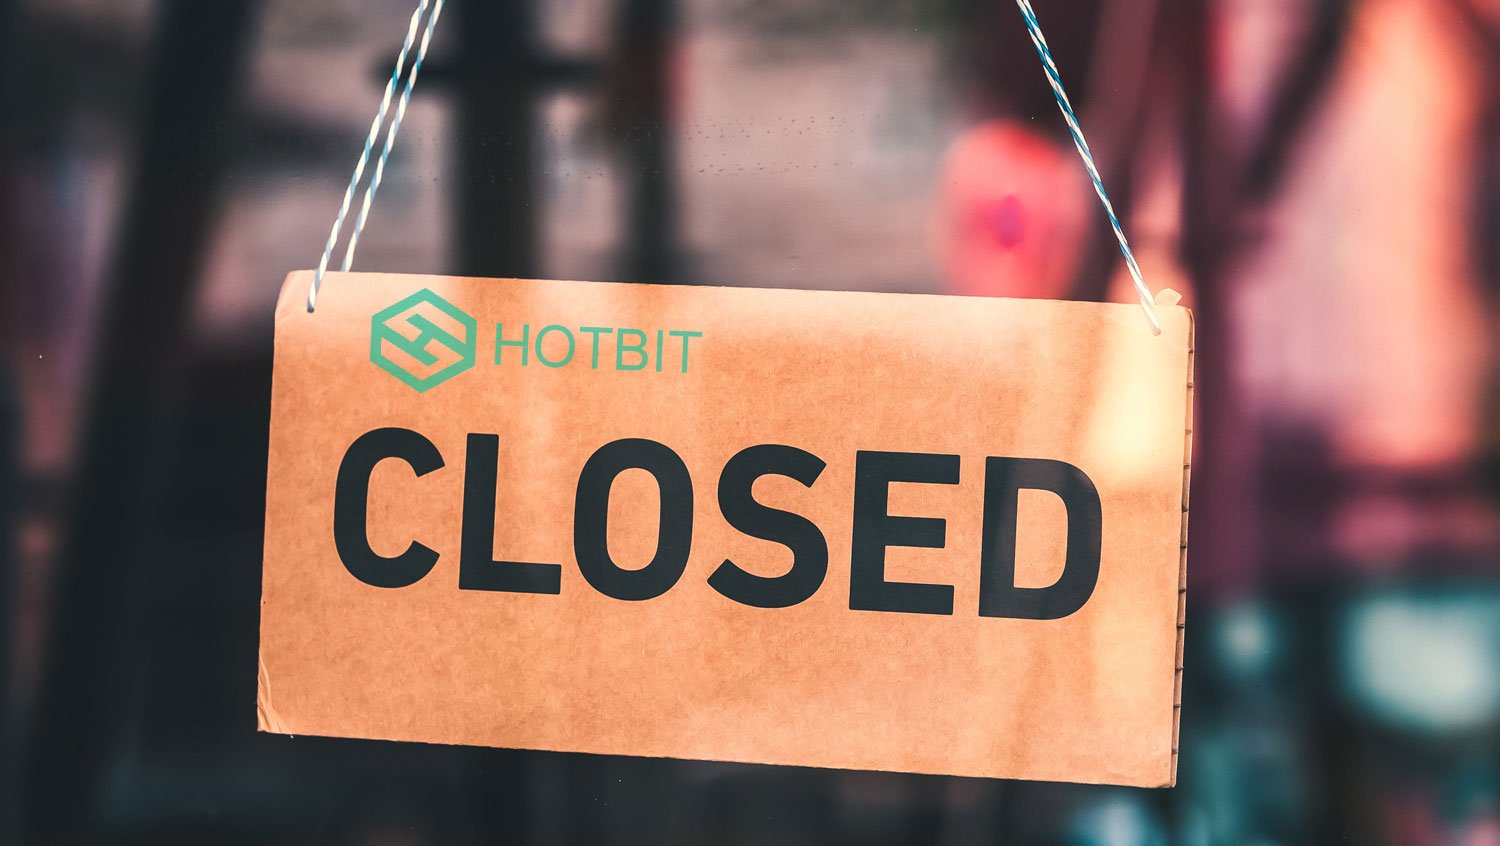 Hotbit Closed